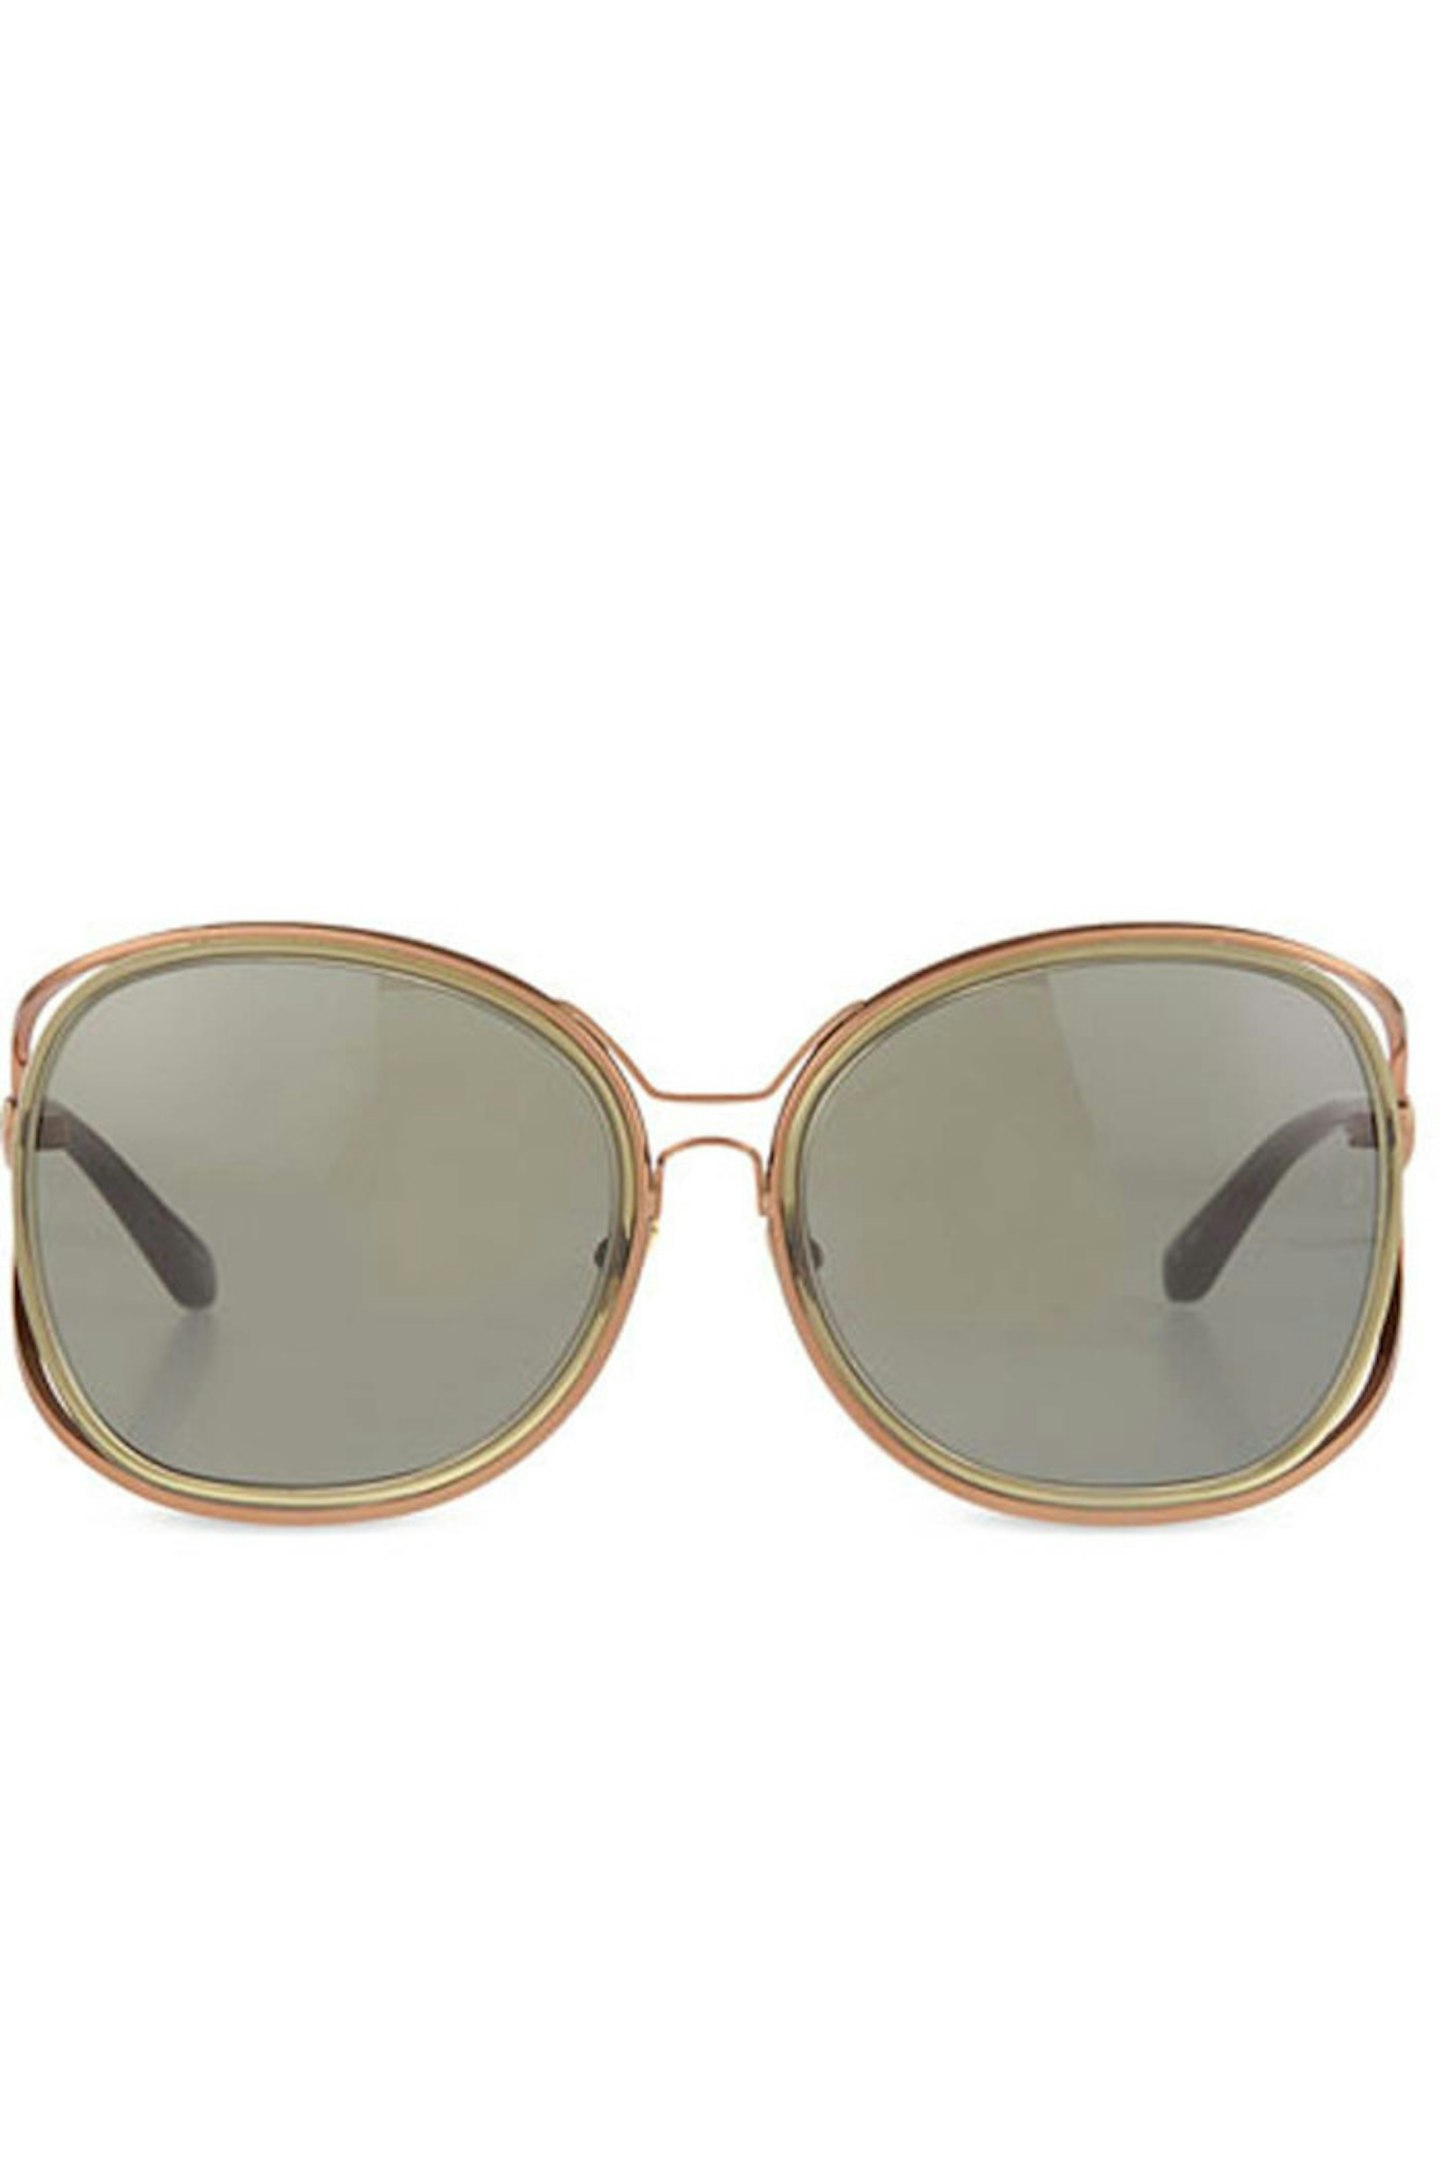 Oversized sunglasses, £460, Linda Farrow at Selfridges